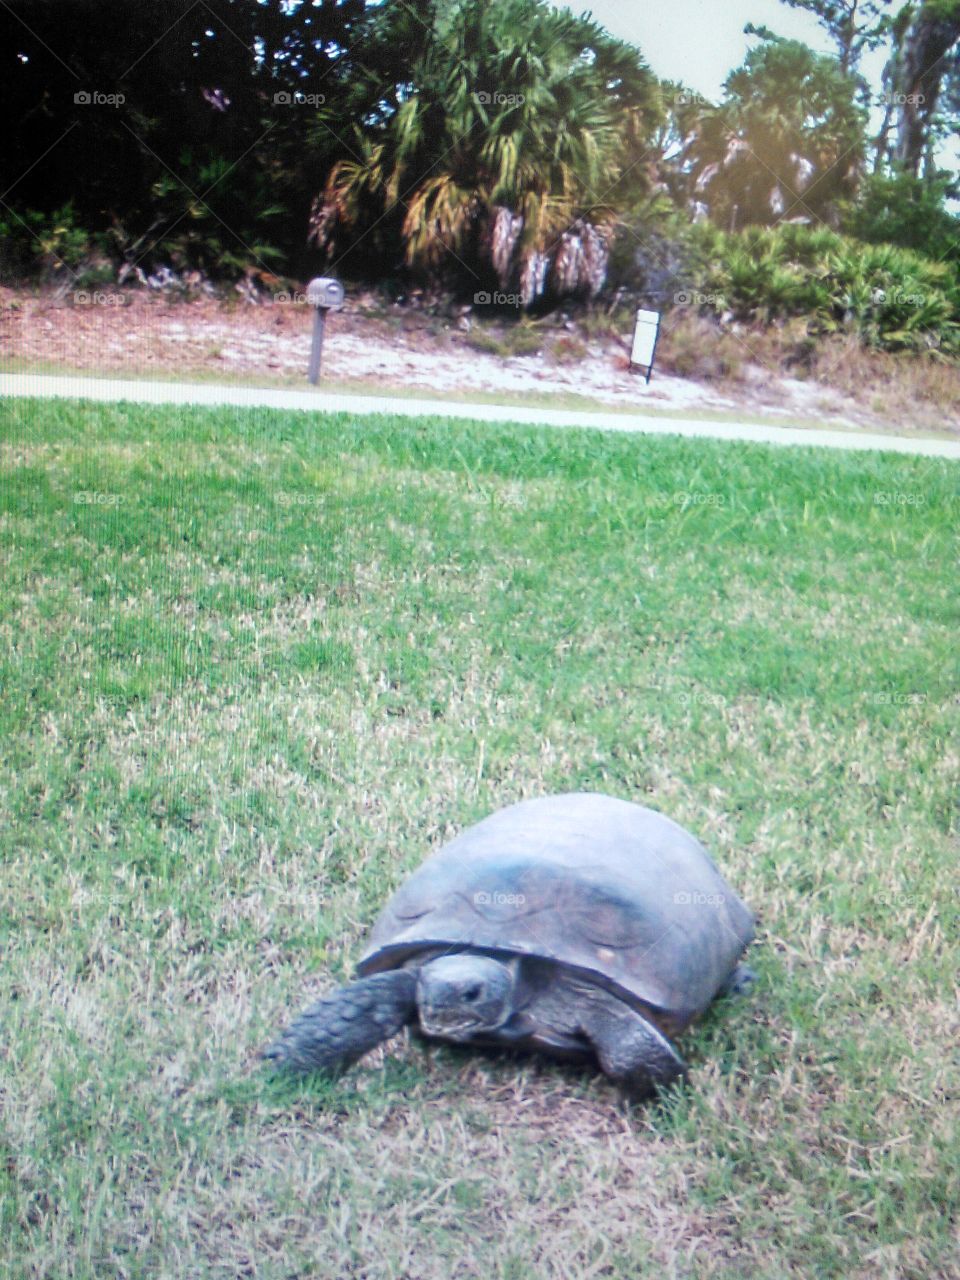 Turtle in the yard.